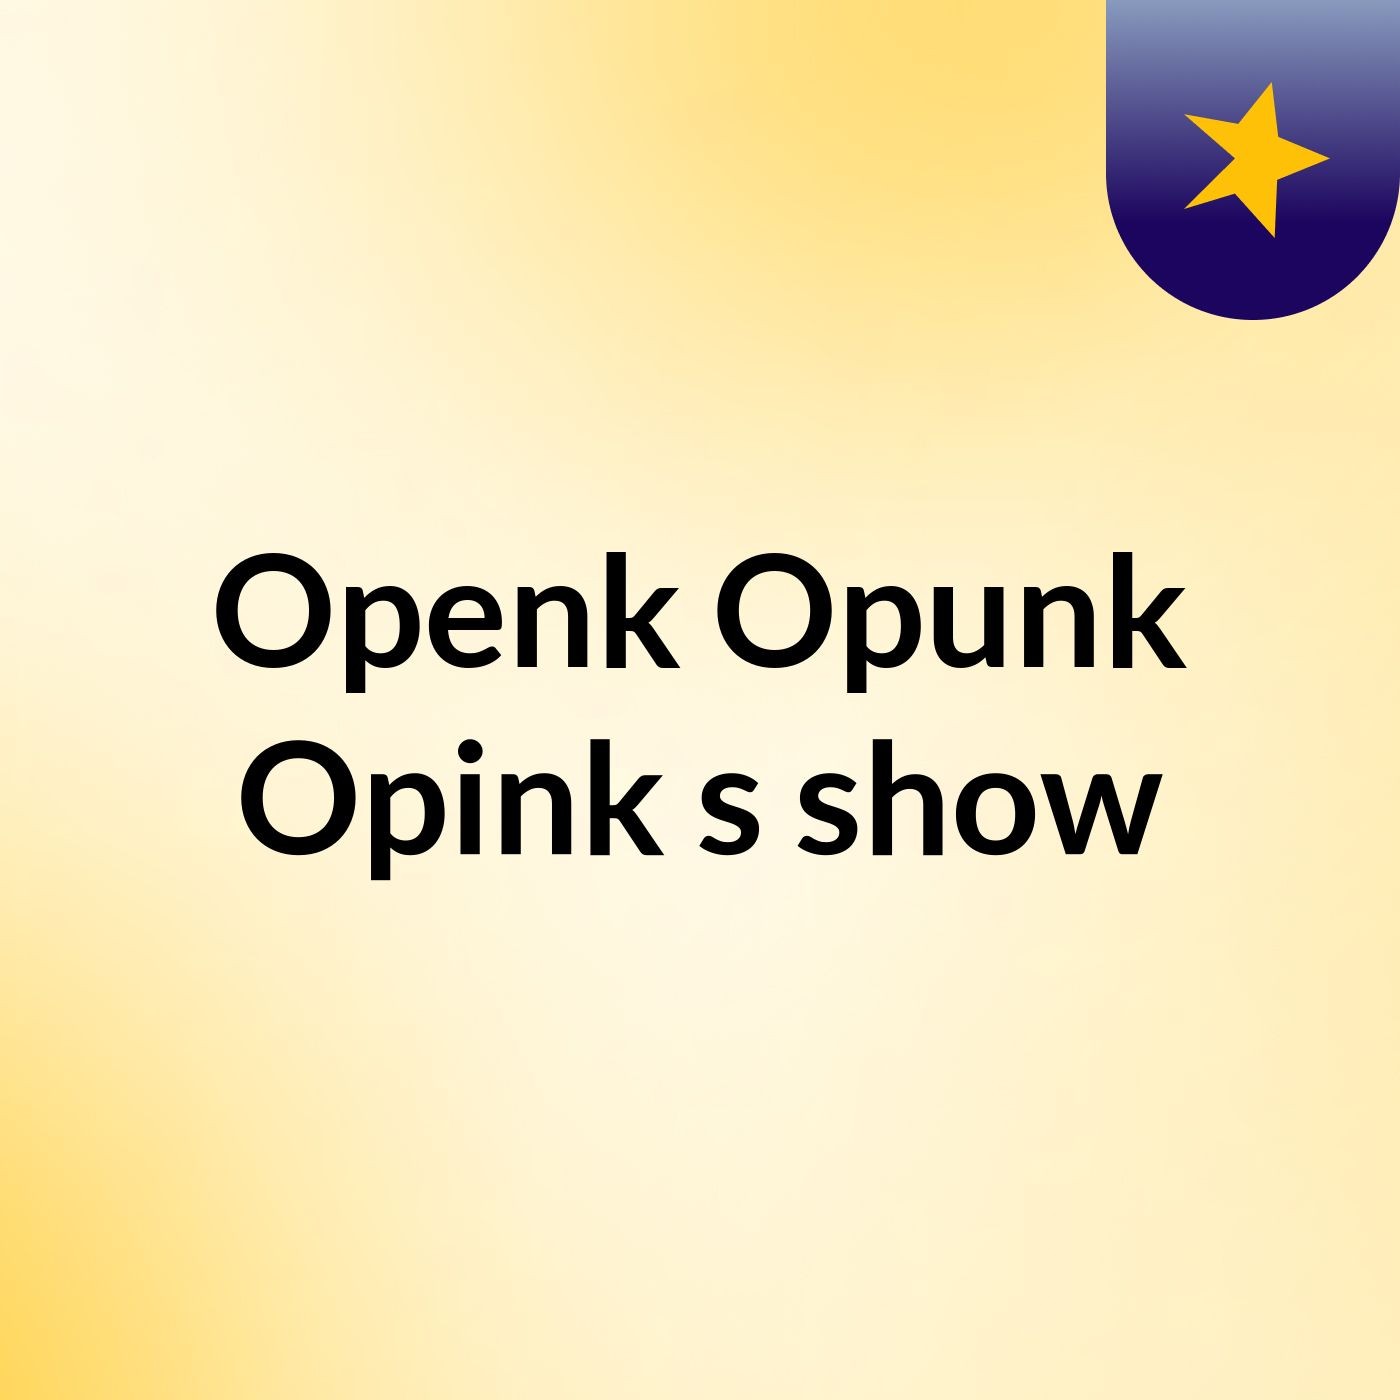 Openk Opunk Opink's show